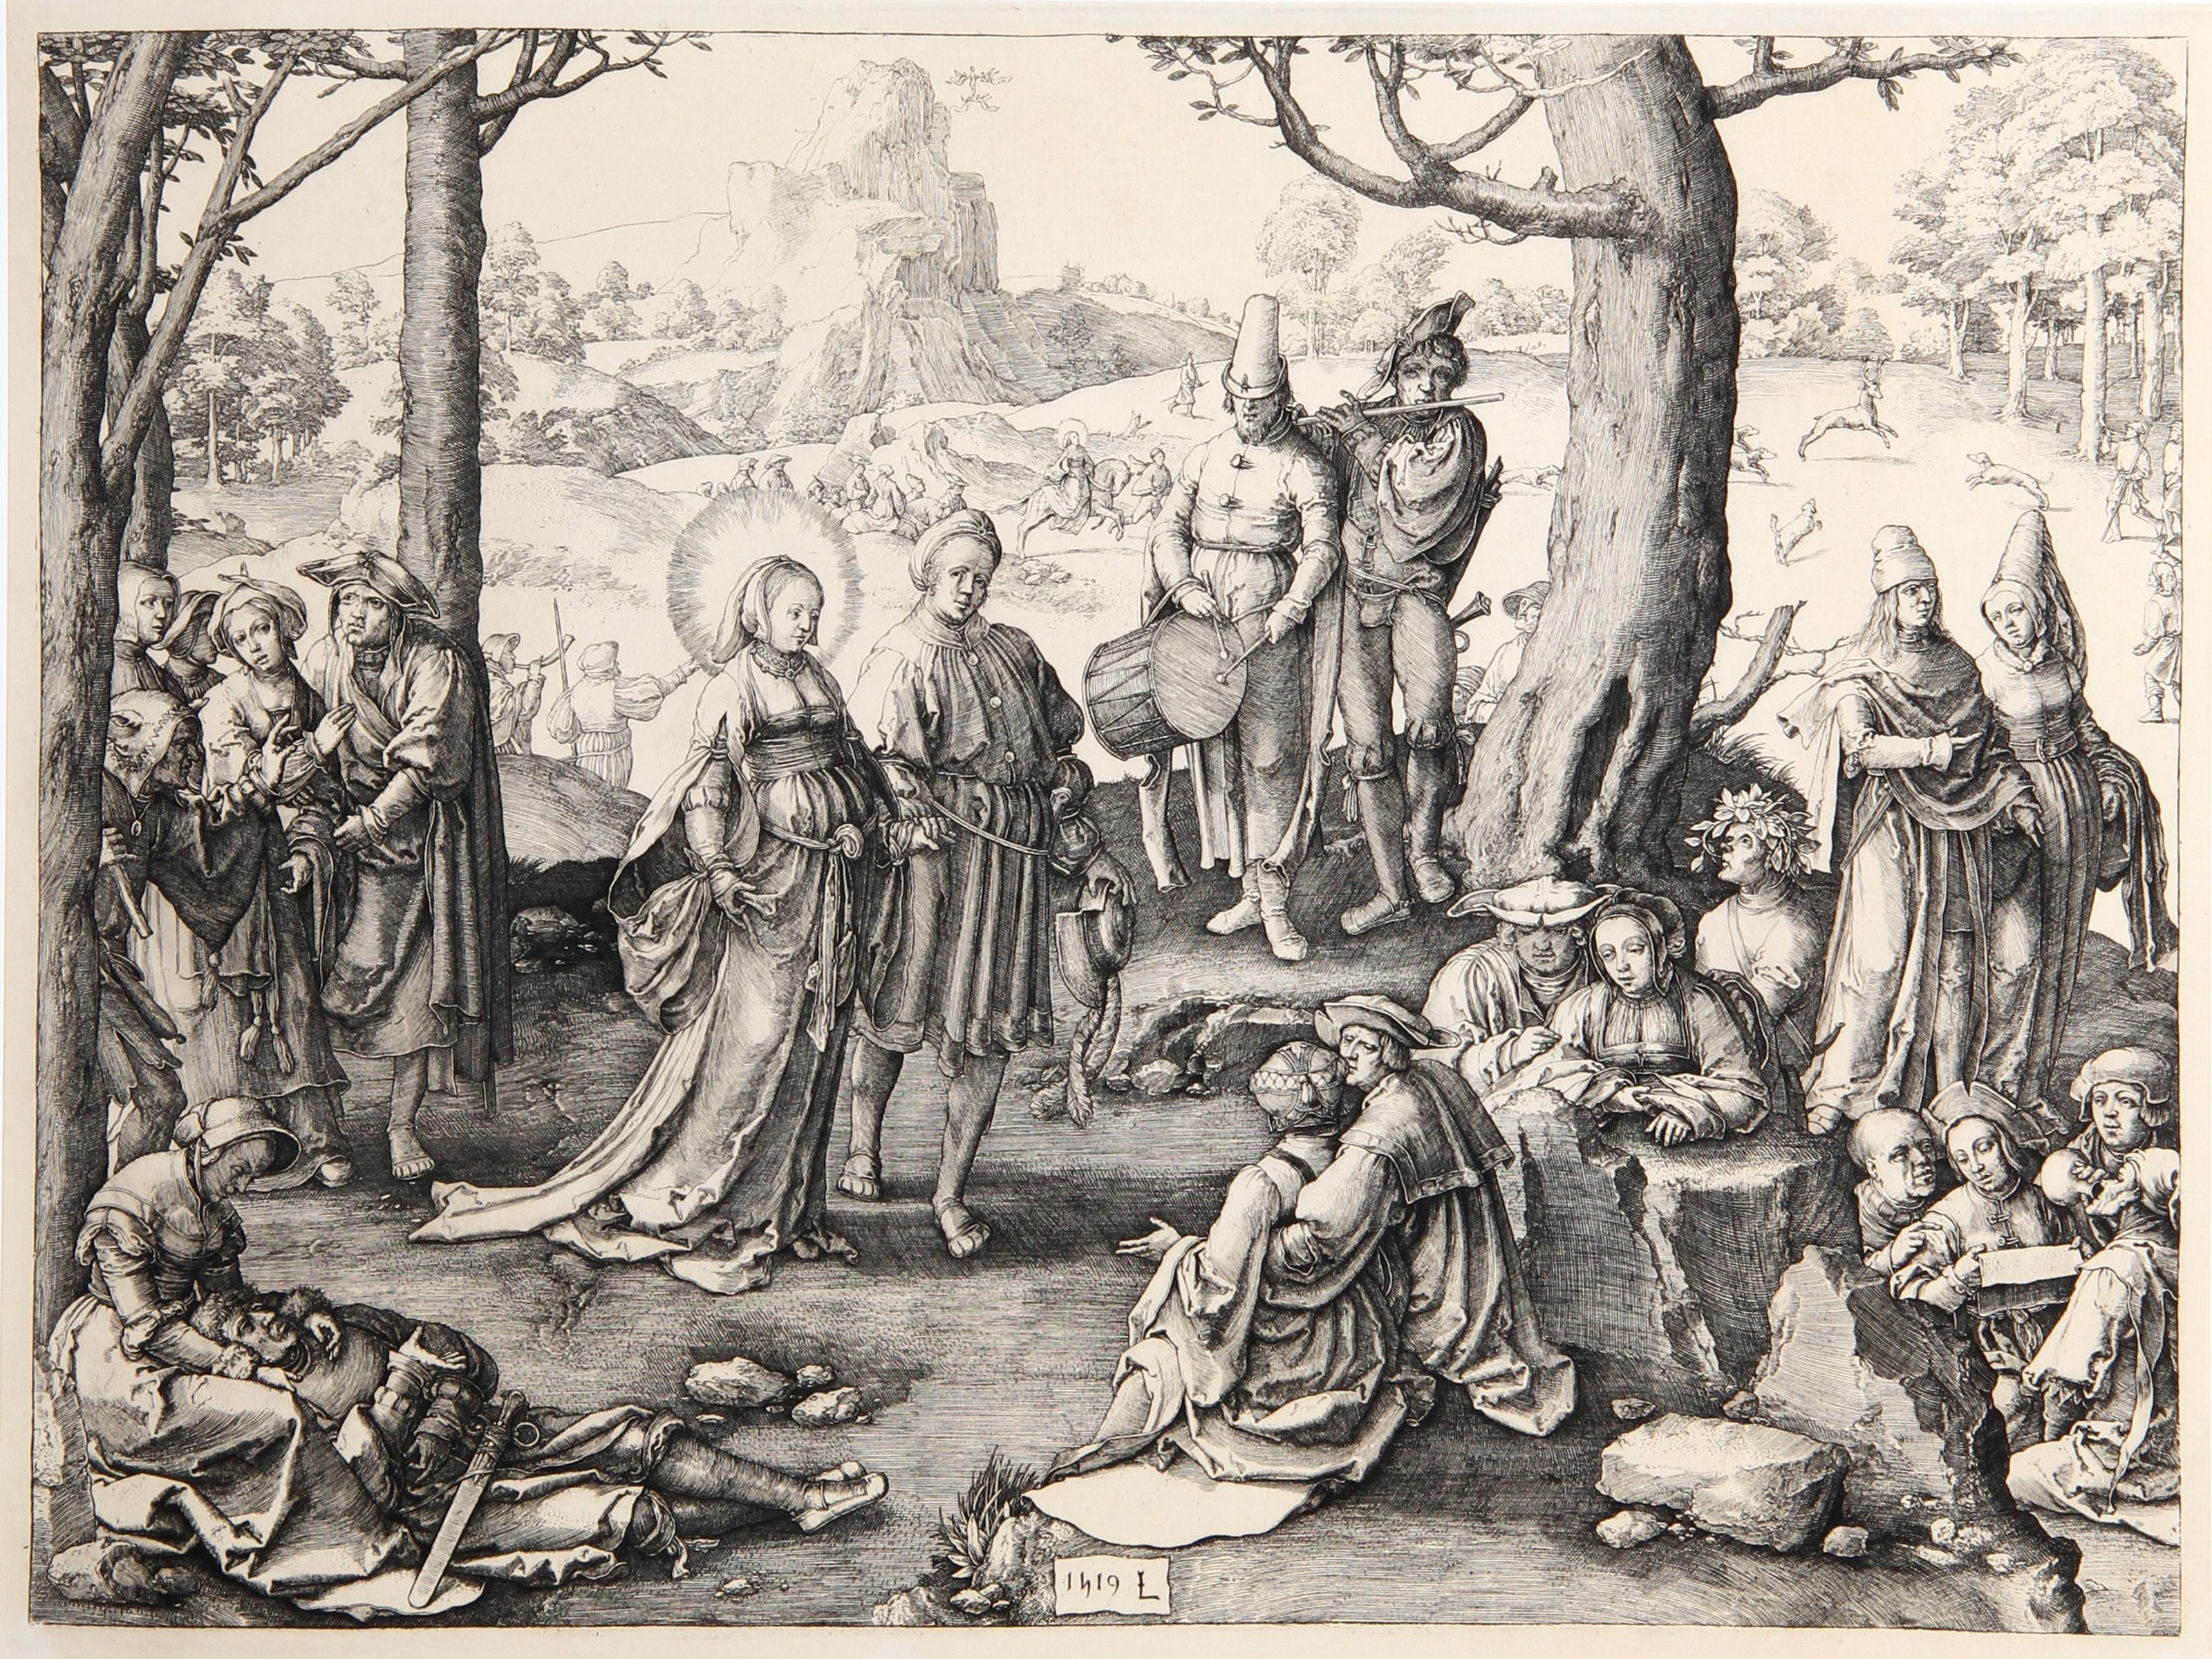 Artist: Lucas van Leyden, After by Amand Durand, Dutch (1494 - 1533) - Marie Madeleine se Livrant aux Plaisirs du Monde, Year: 1873, Medium: Heliogravure, Size: 12  x 16 in. (30.48  x 40.64 cm), Printer: Amand Durand, Description: French Engraver